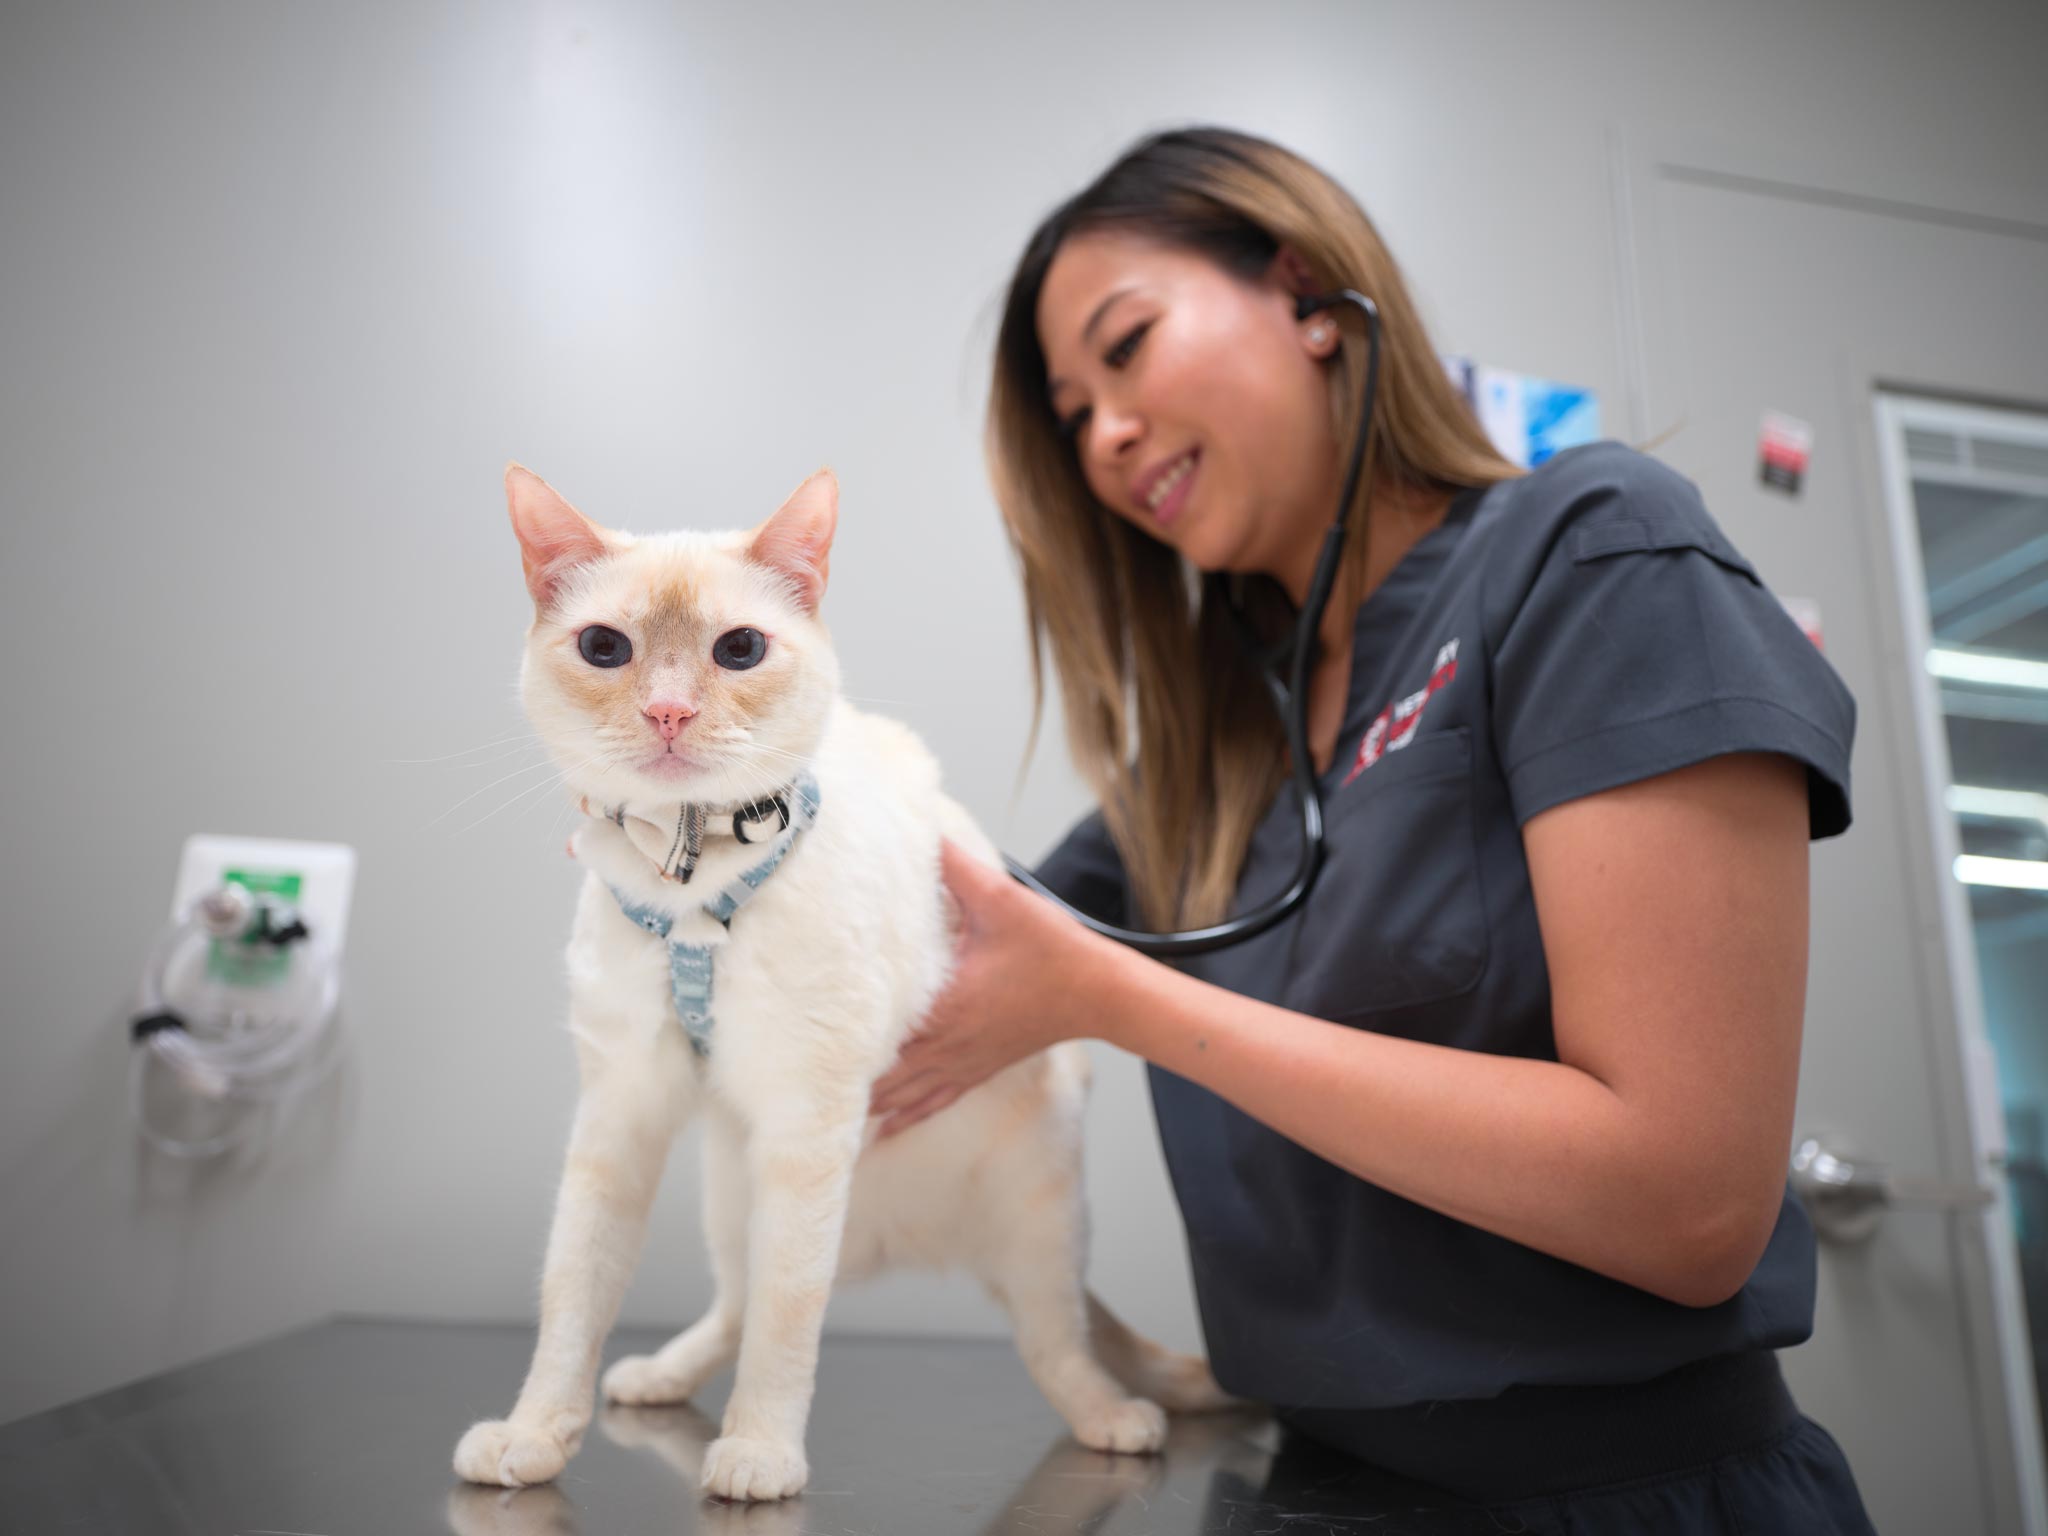 staff member examining cat